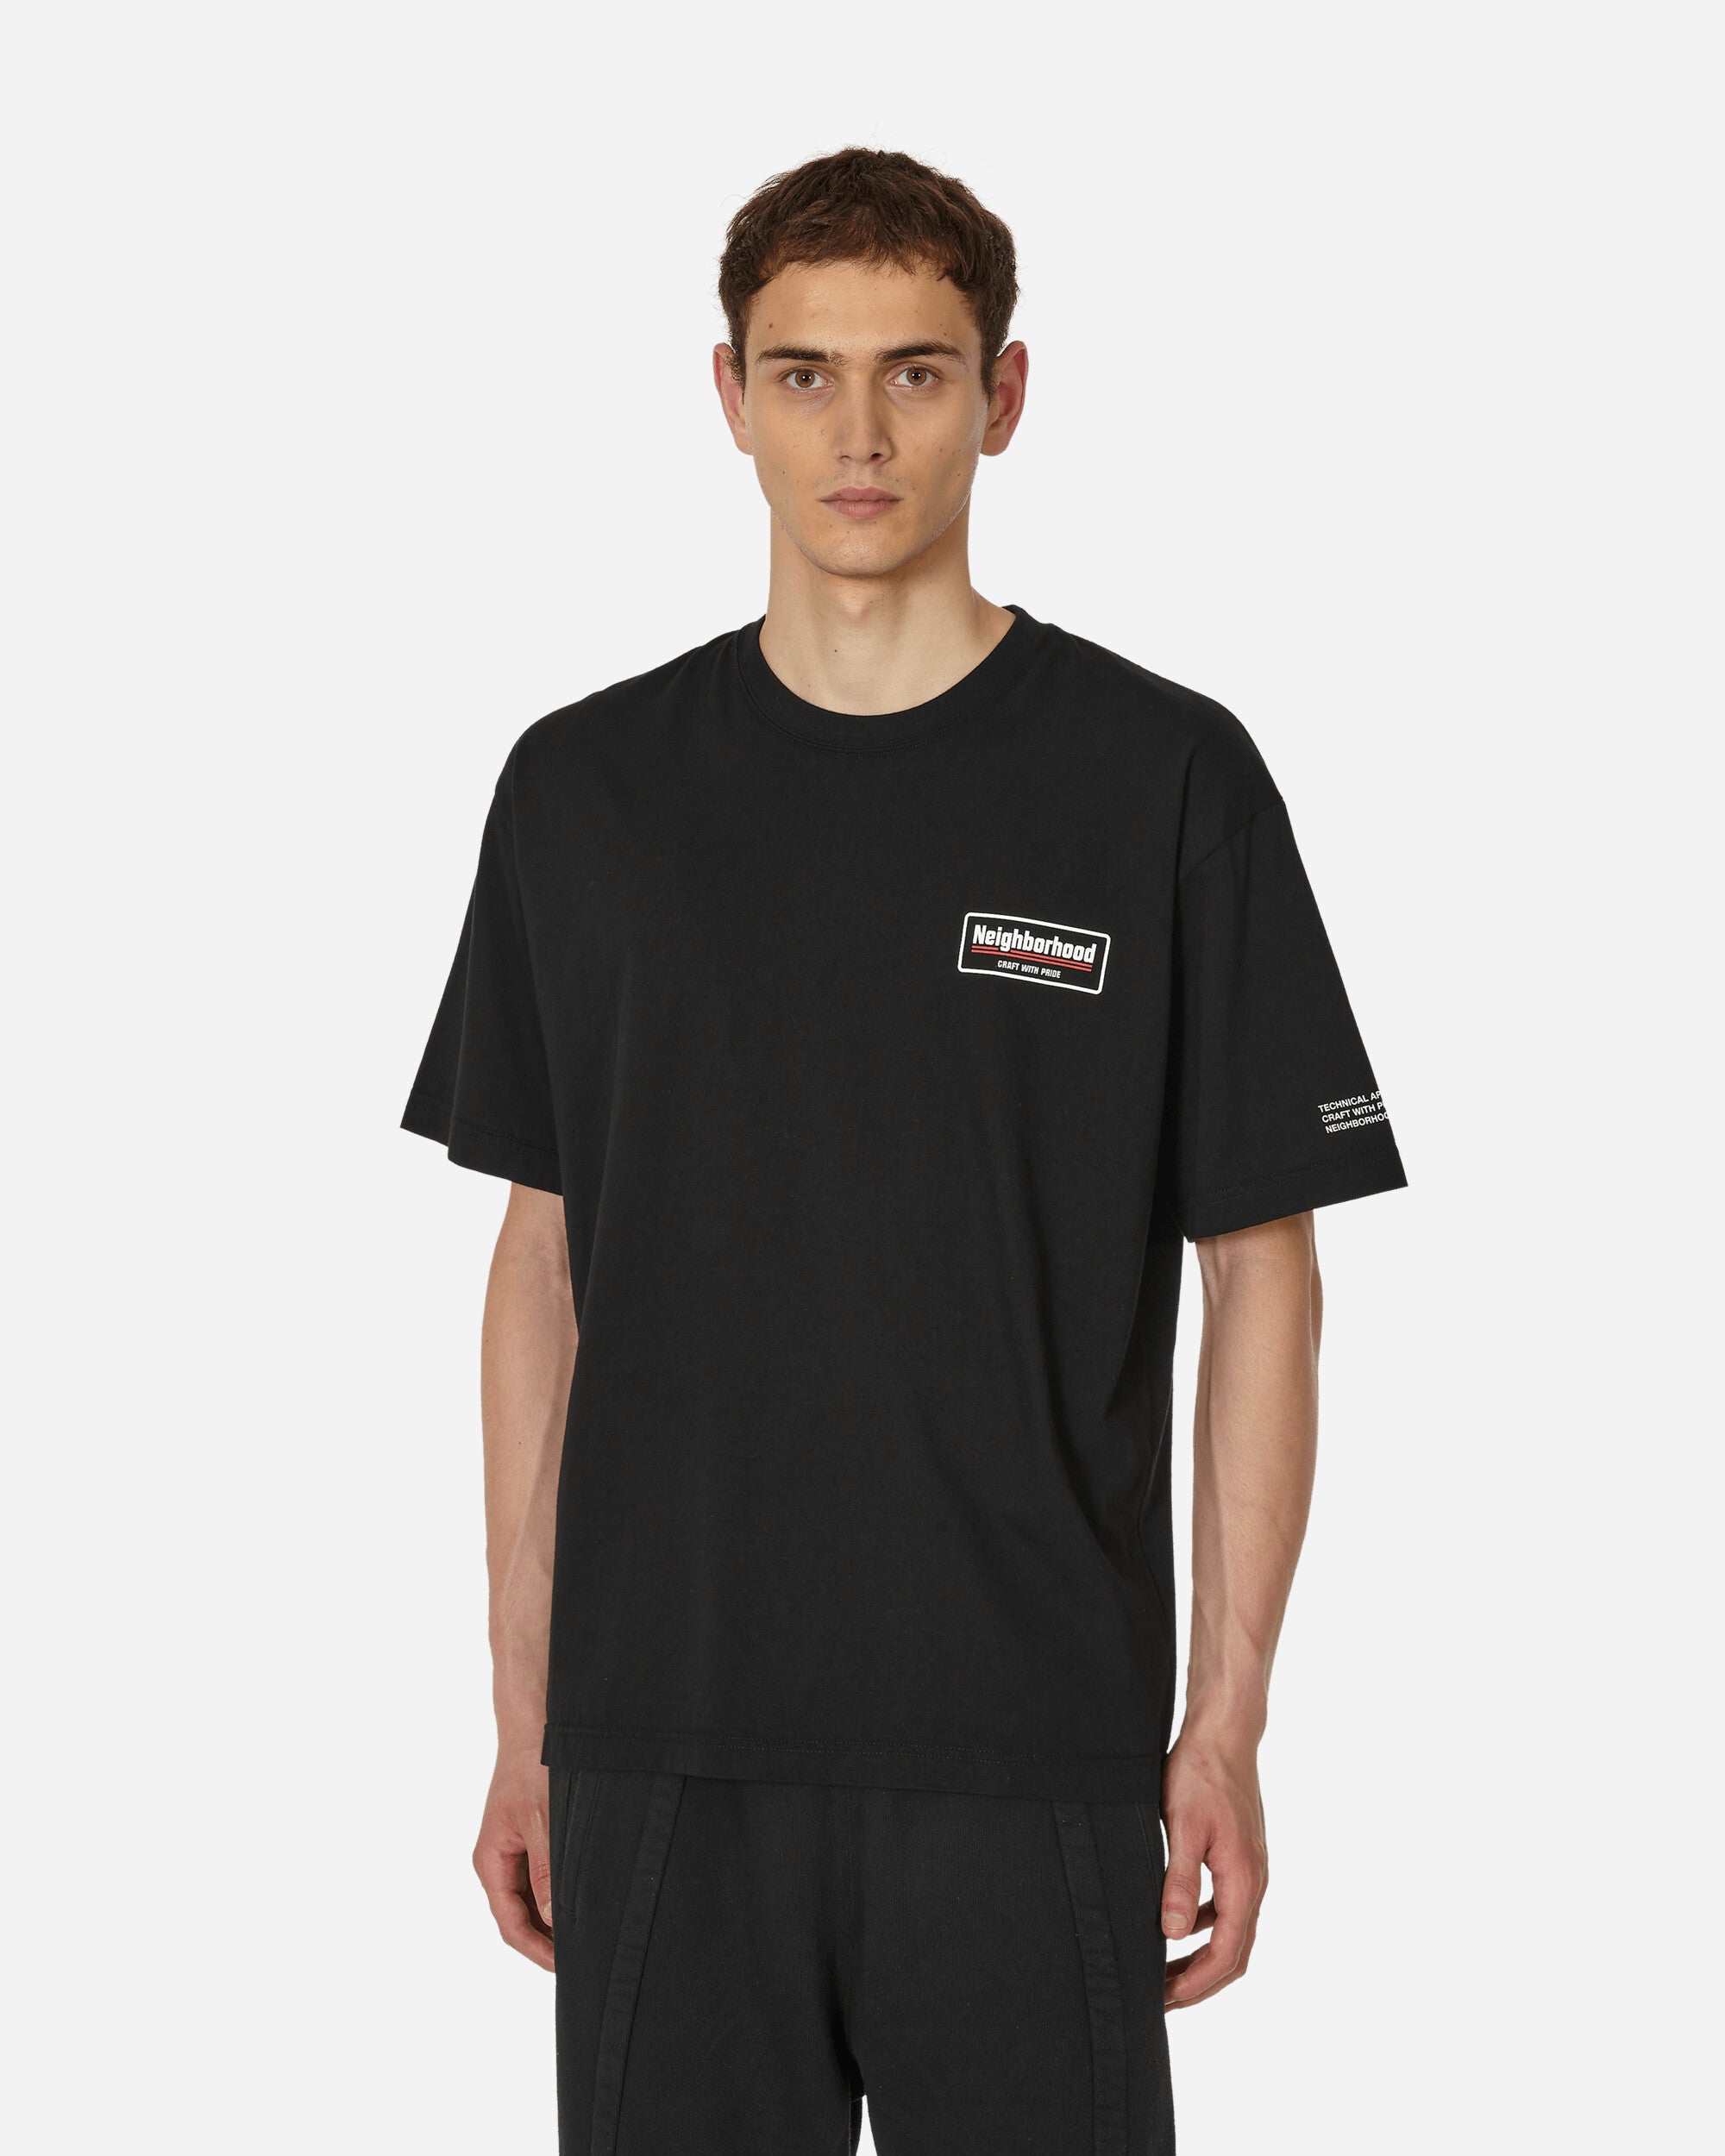 Neighborhood SS-4 T-Shirt Black - Slam Jam® Official Store